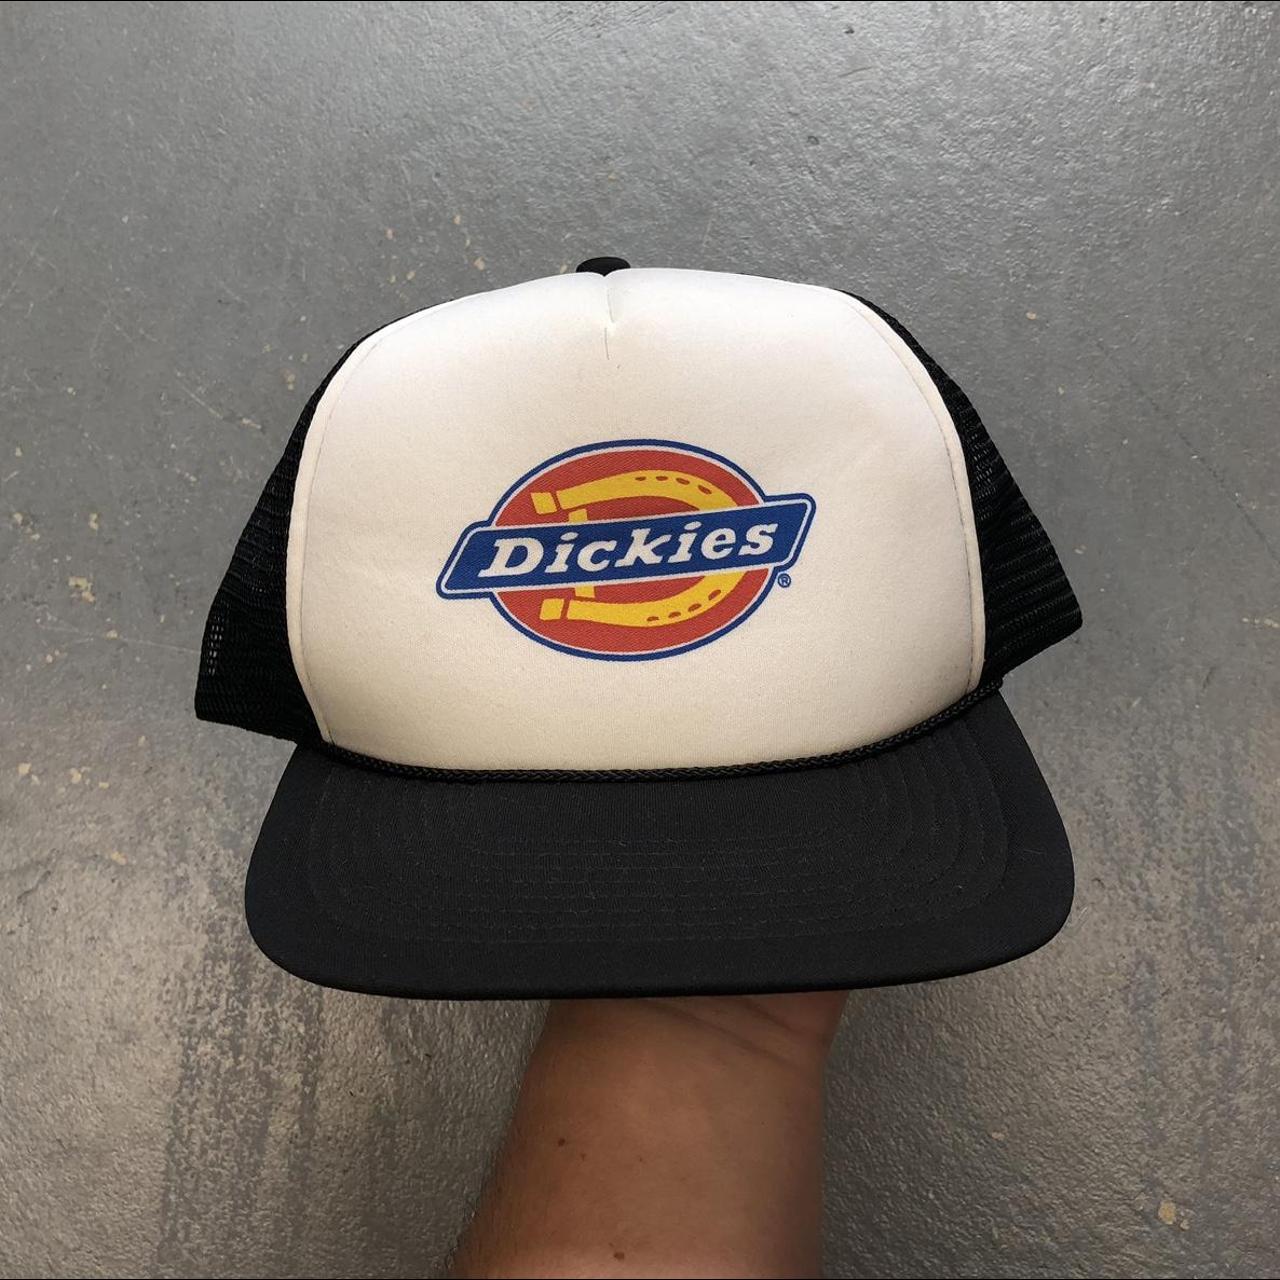 Dickies white & black trucker hat, - Condition